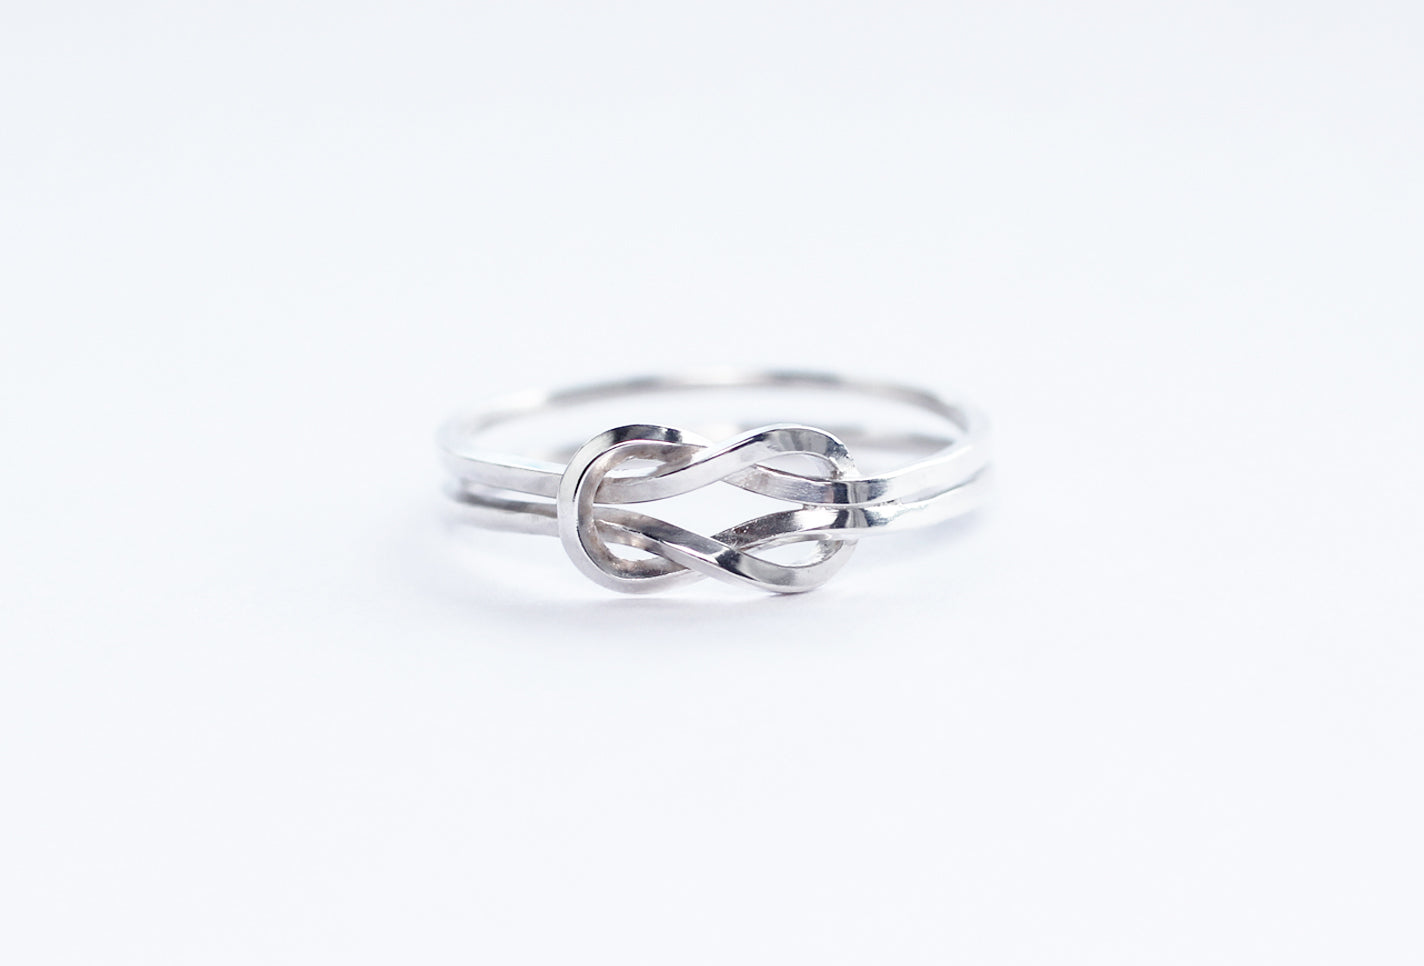 Evighet-silver-eternity-ring-by-Marie-Beatrice-Gade-flatlay